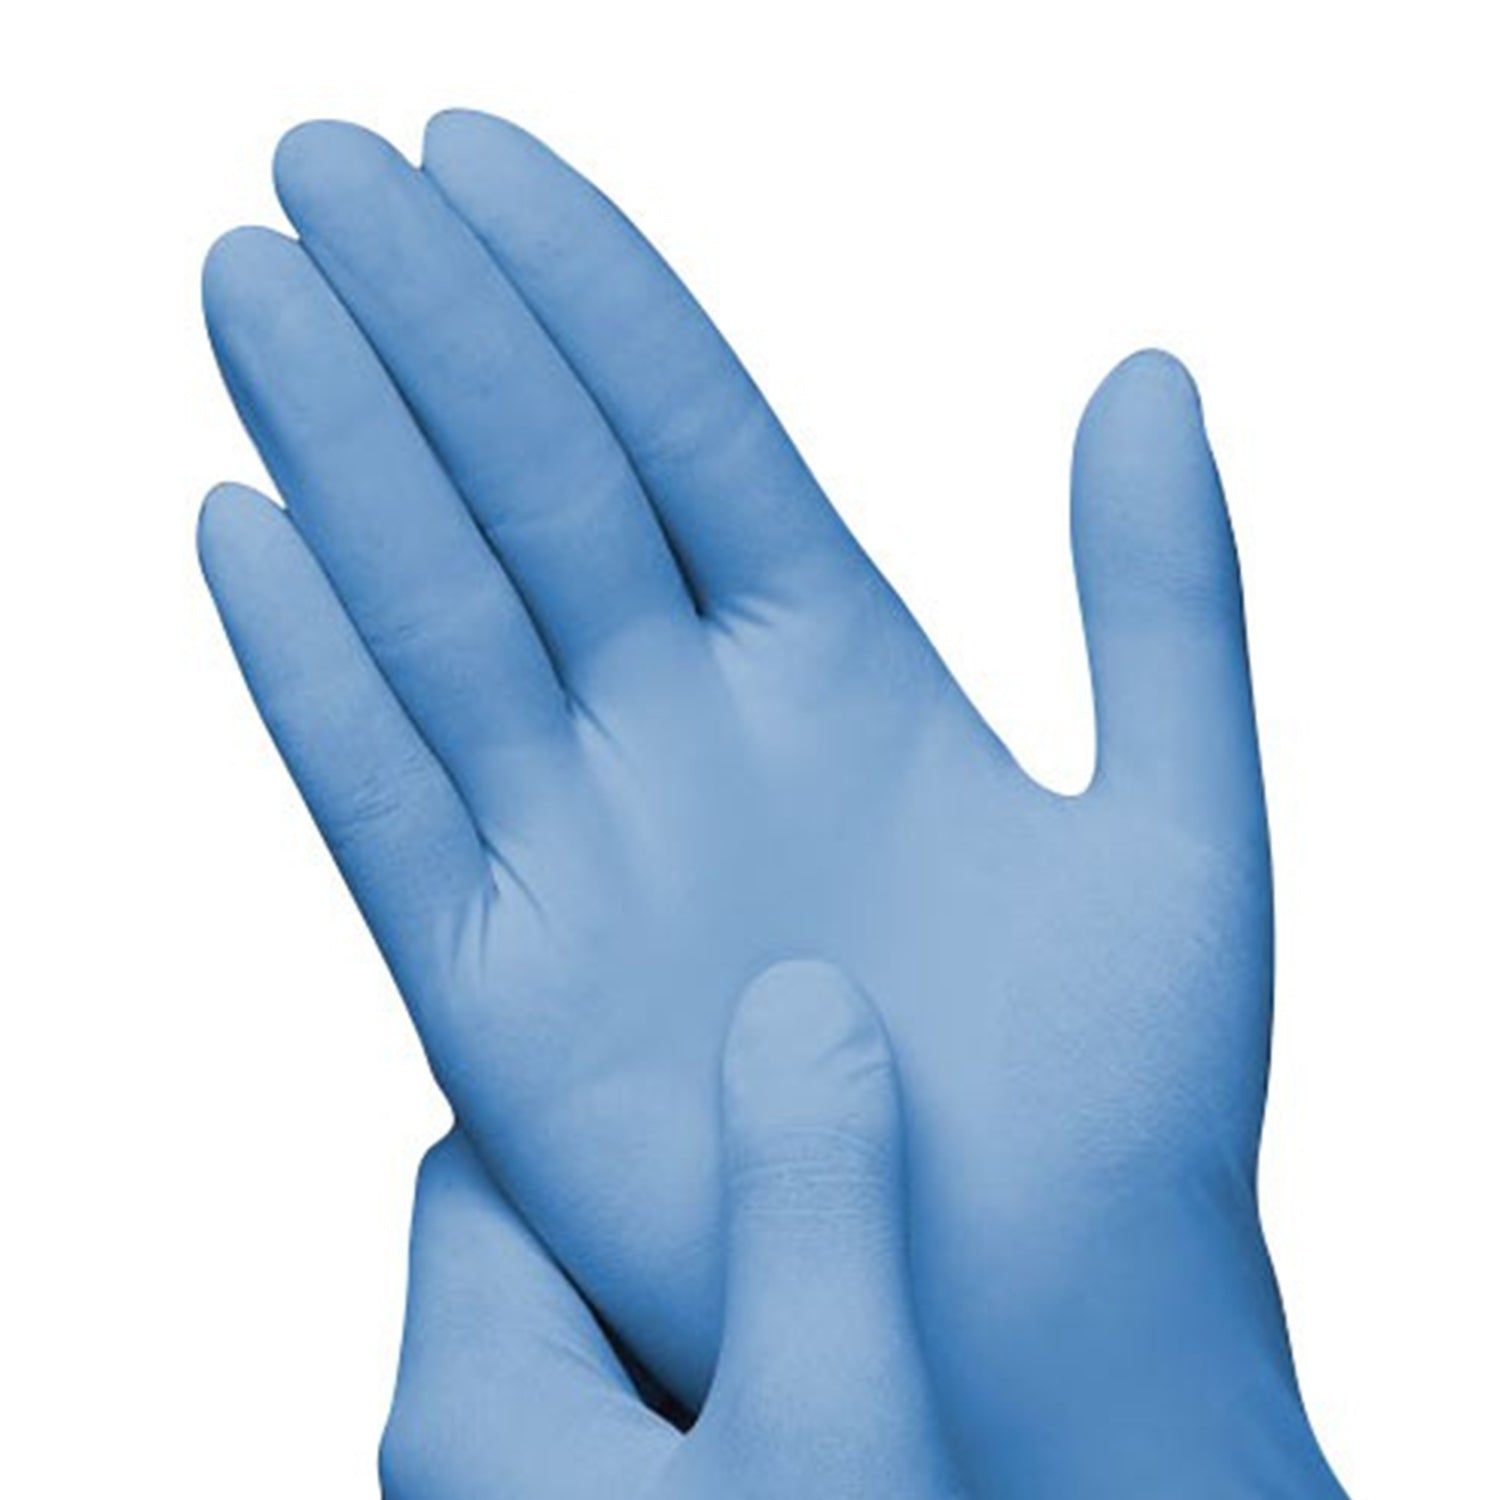 Premier AF Nitrile Examination Gloves | Sterile | Latex Free | Large | Pack of 50 Pairs (5)